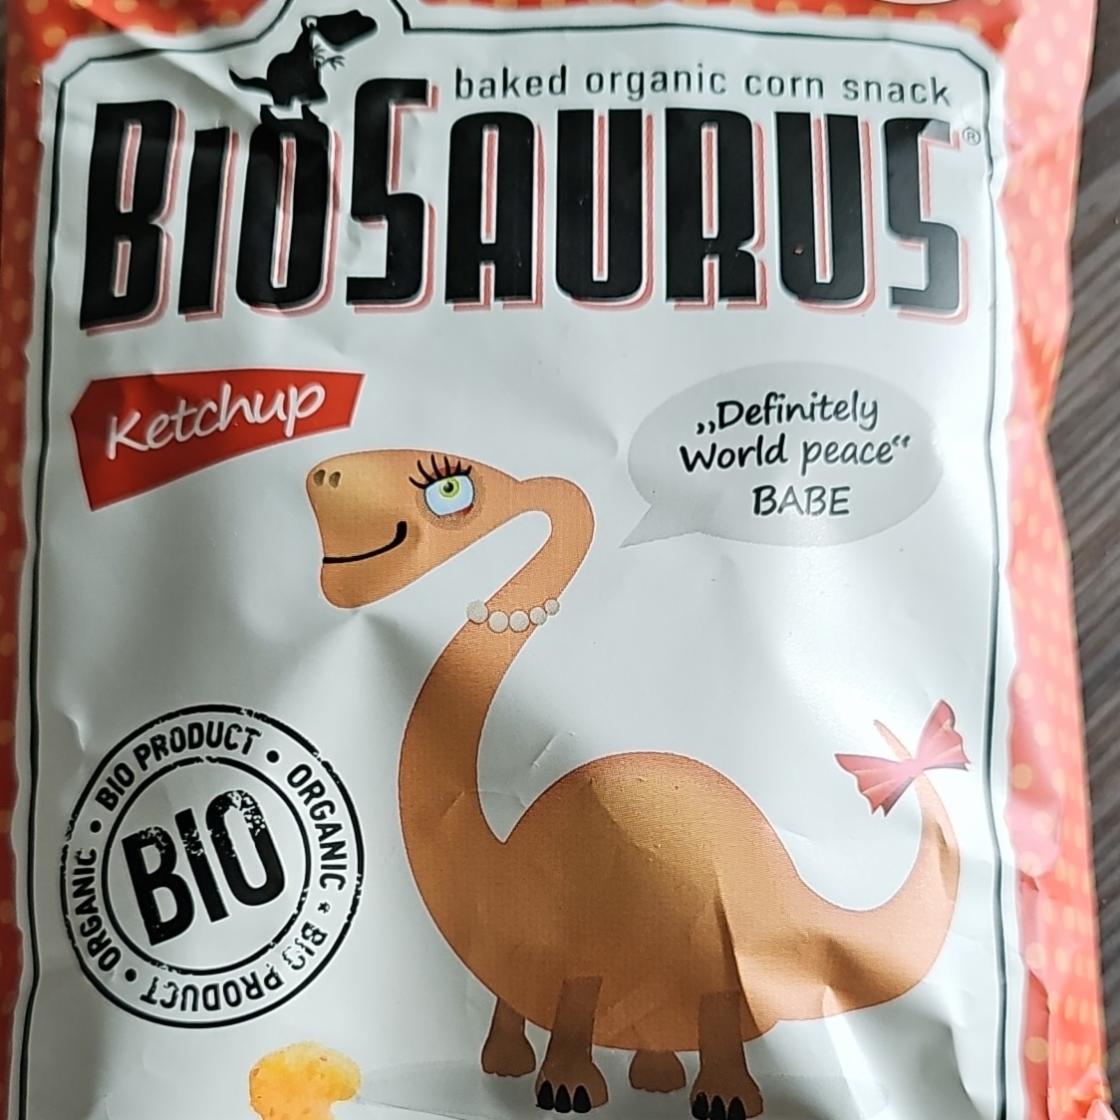 Fotografie - Biosaurus baked organic corn snack ketchup McLloyd´s